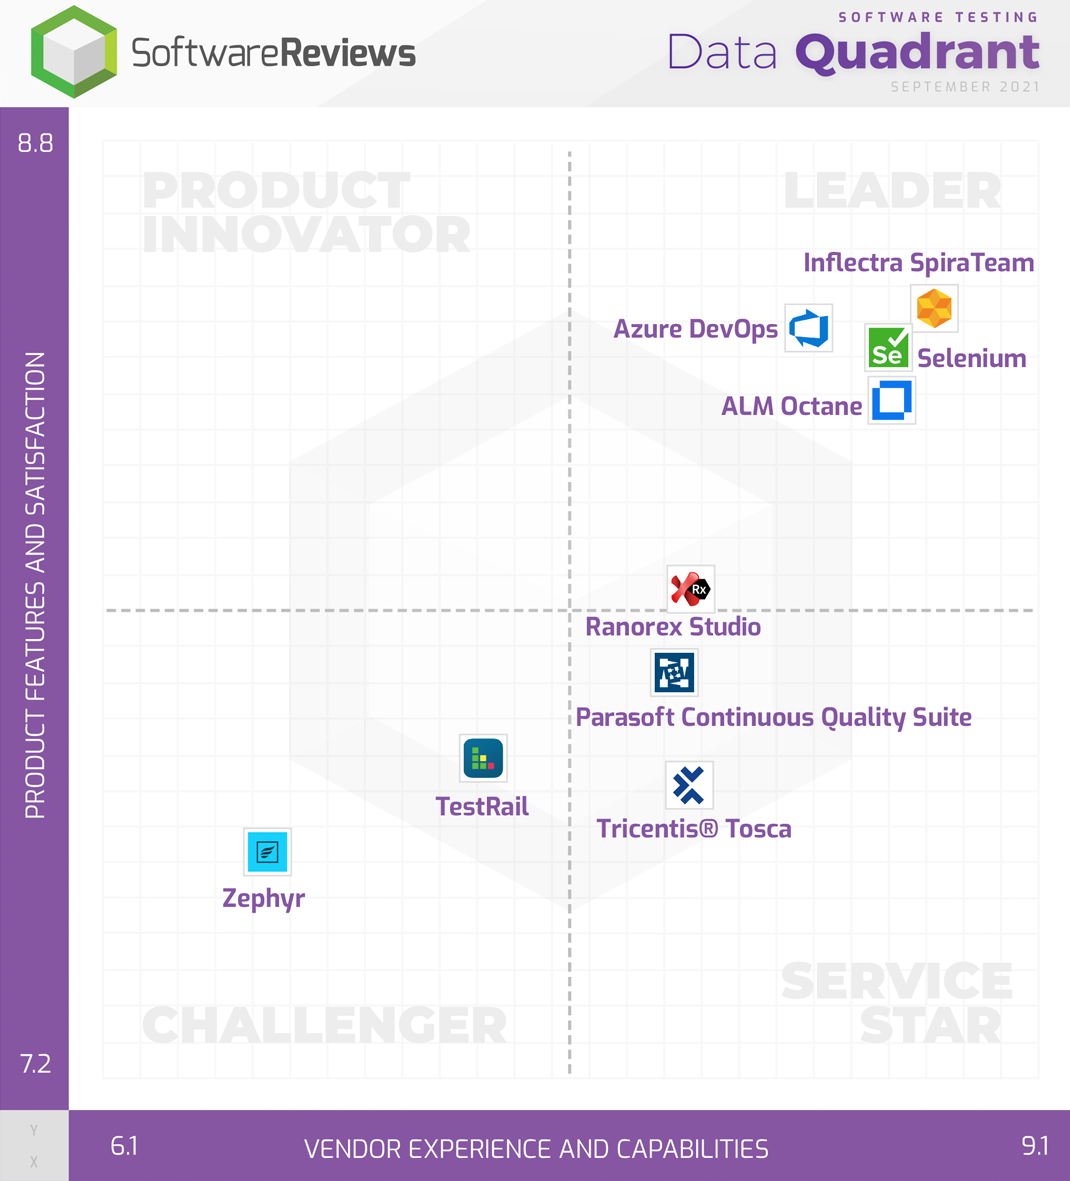 SpiraTeam ranked Leader in InfoTech ALM Data Quadrant